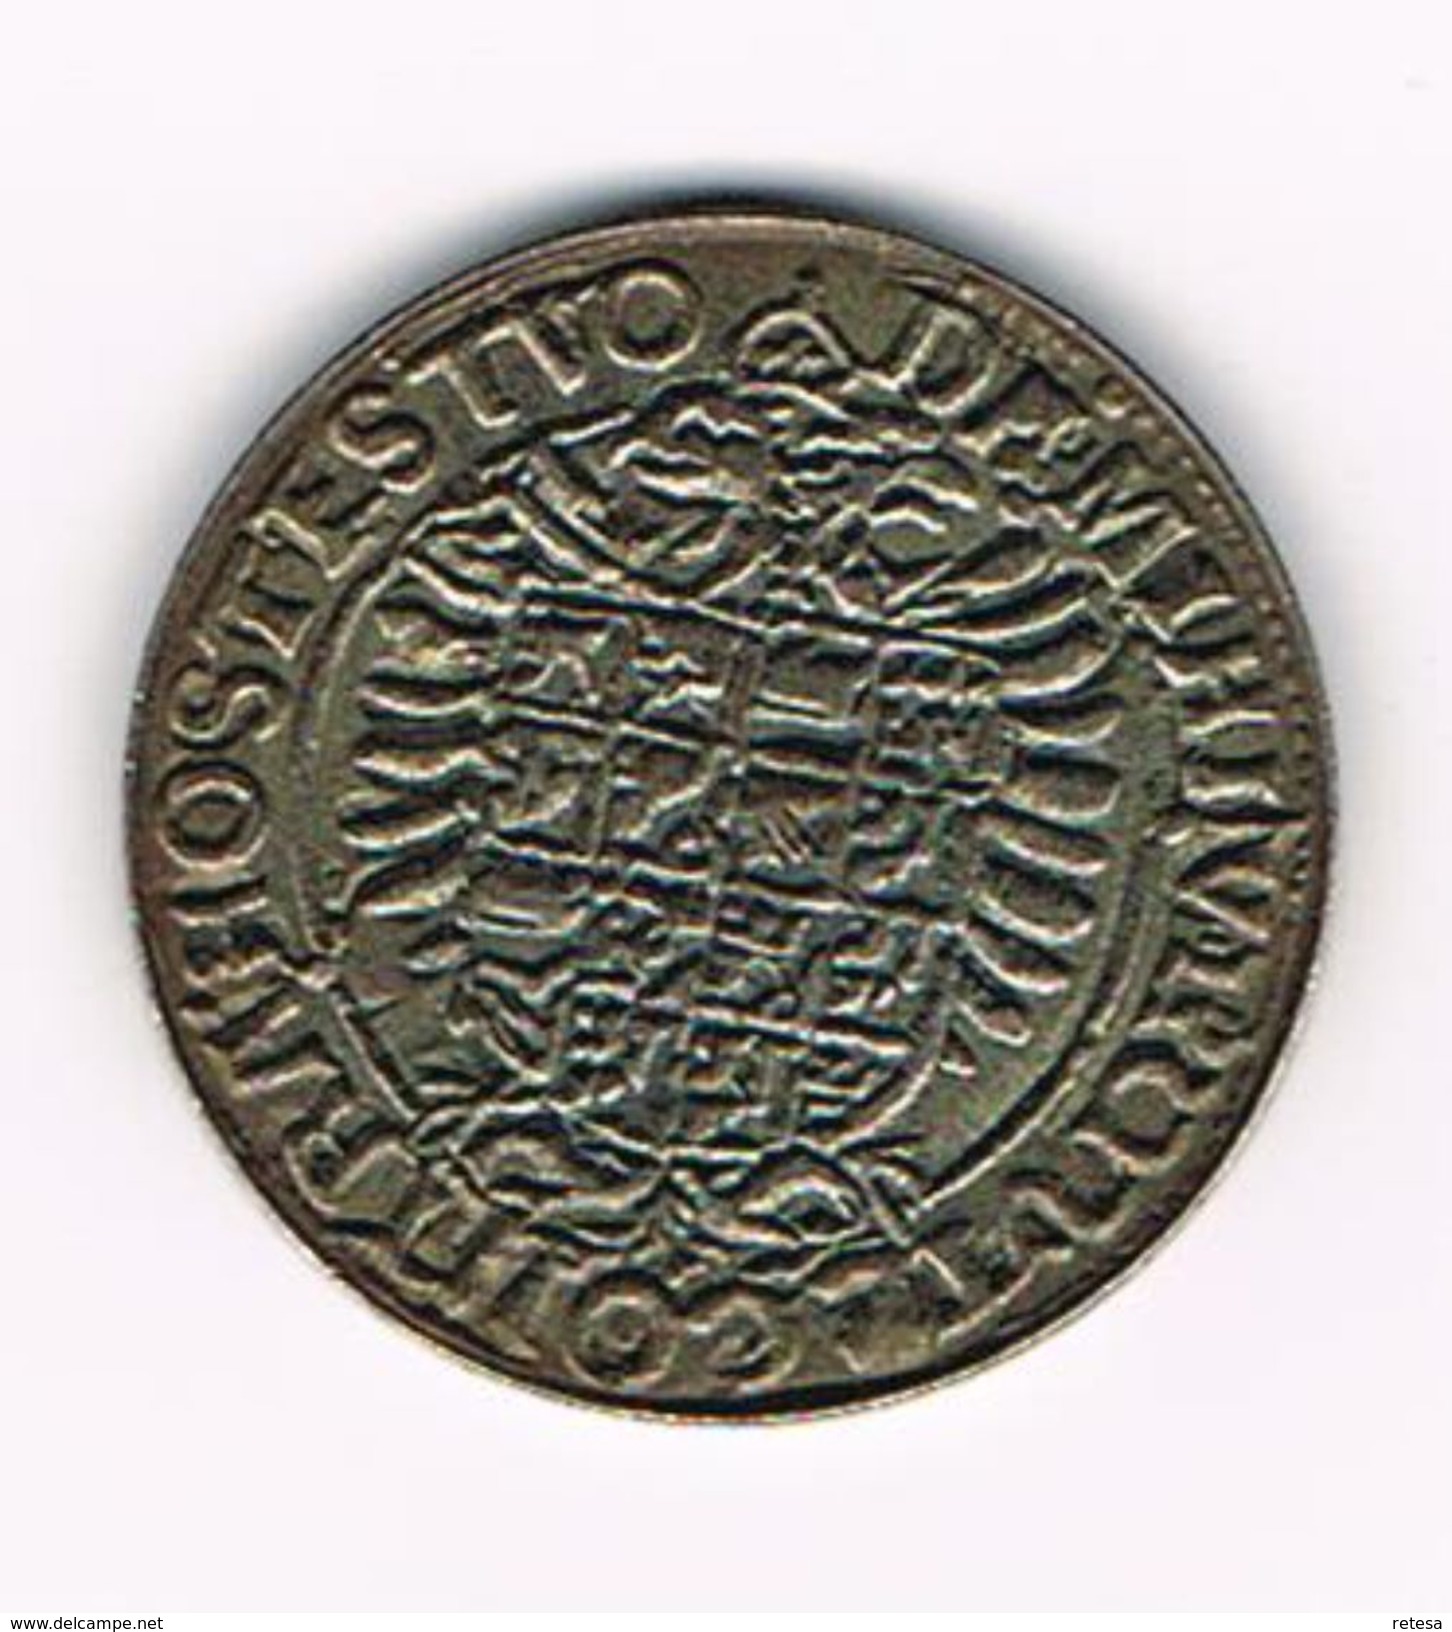 )  HERDENKINGSMUNT  REPLICA GOUDEN REAAL KAREL V KAROLUS 1542-56 - Souvenirmunten (elongated Coins)